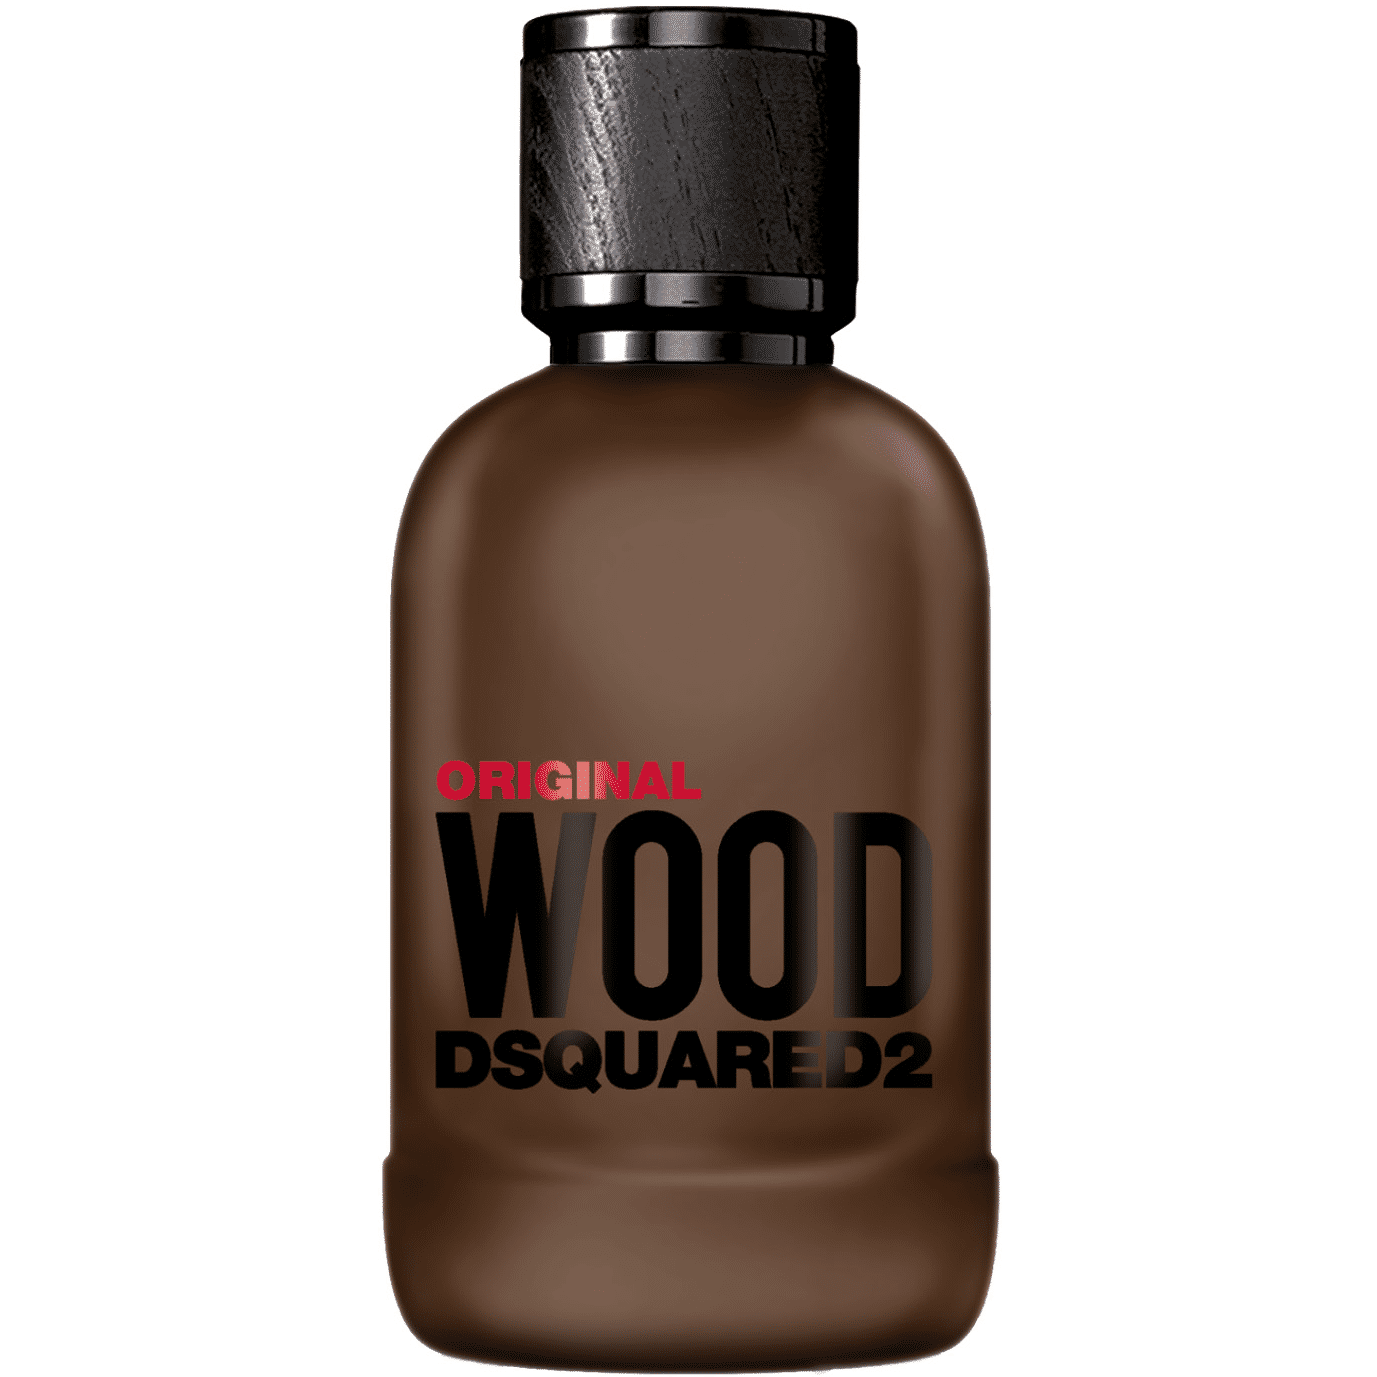 Dsquared2 Original Wood Eau de parfum spray 50 ml